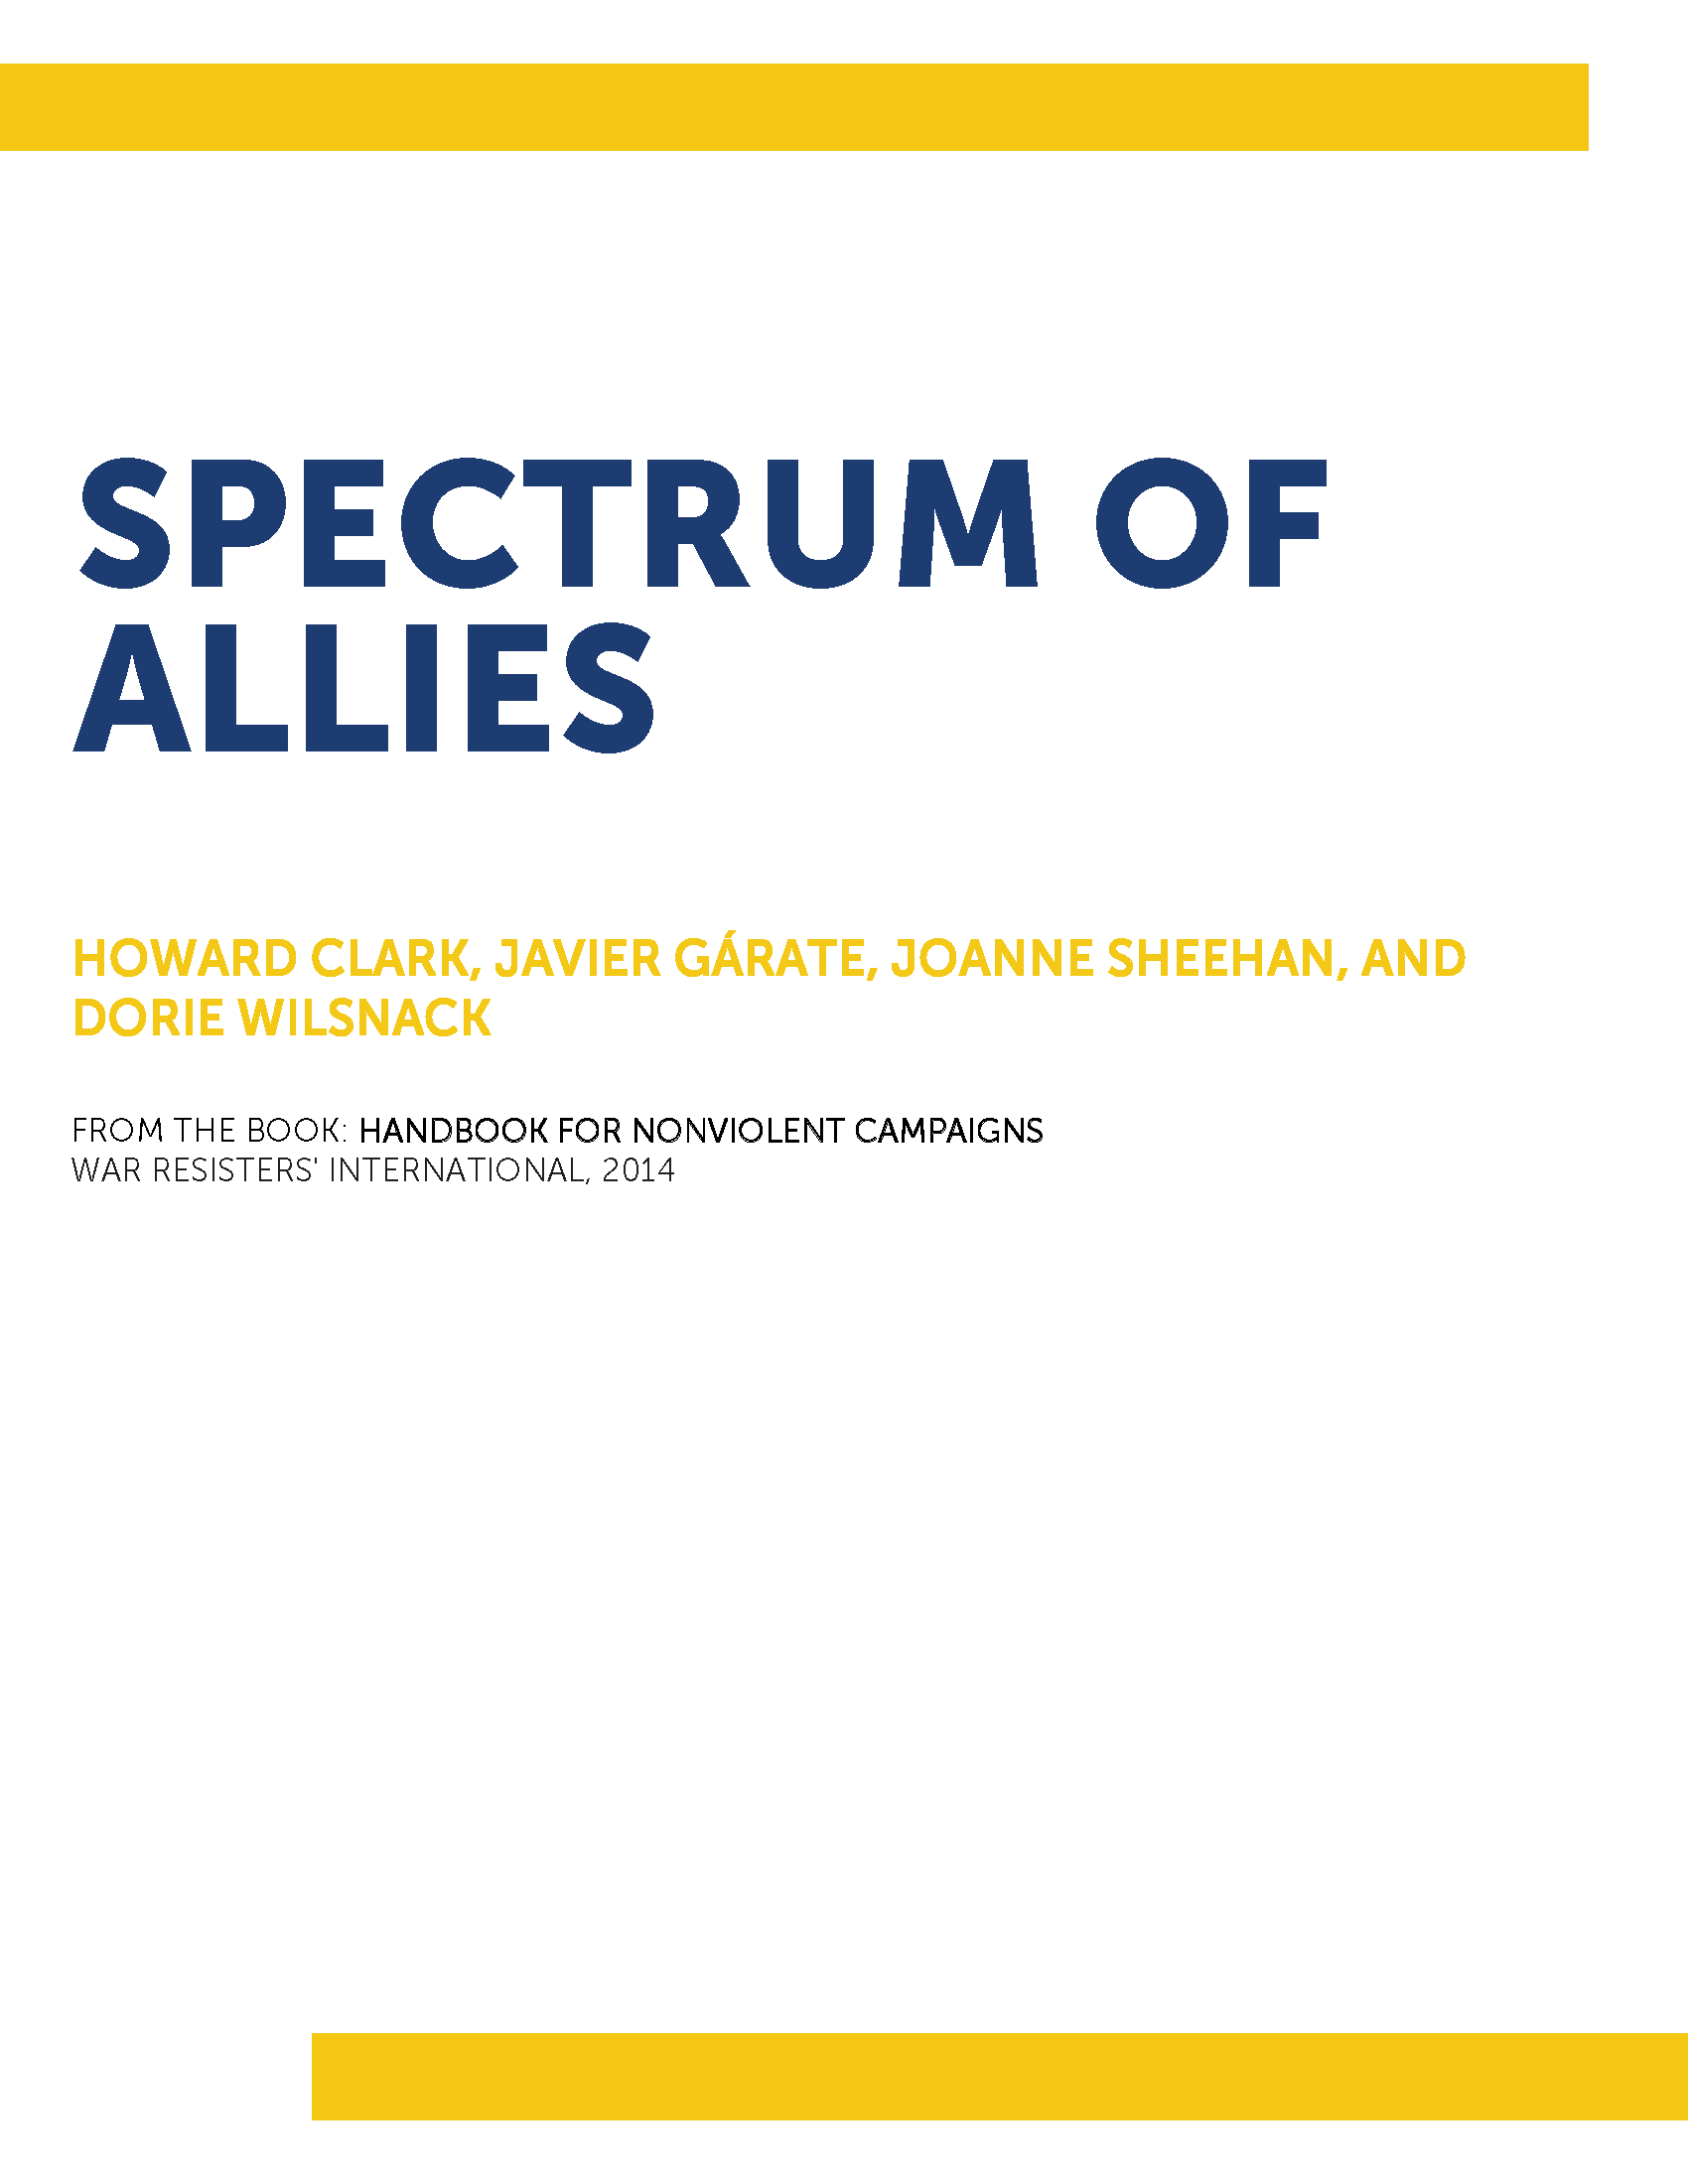 Spectrum of Allies